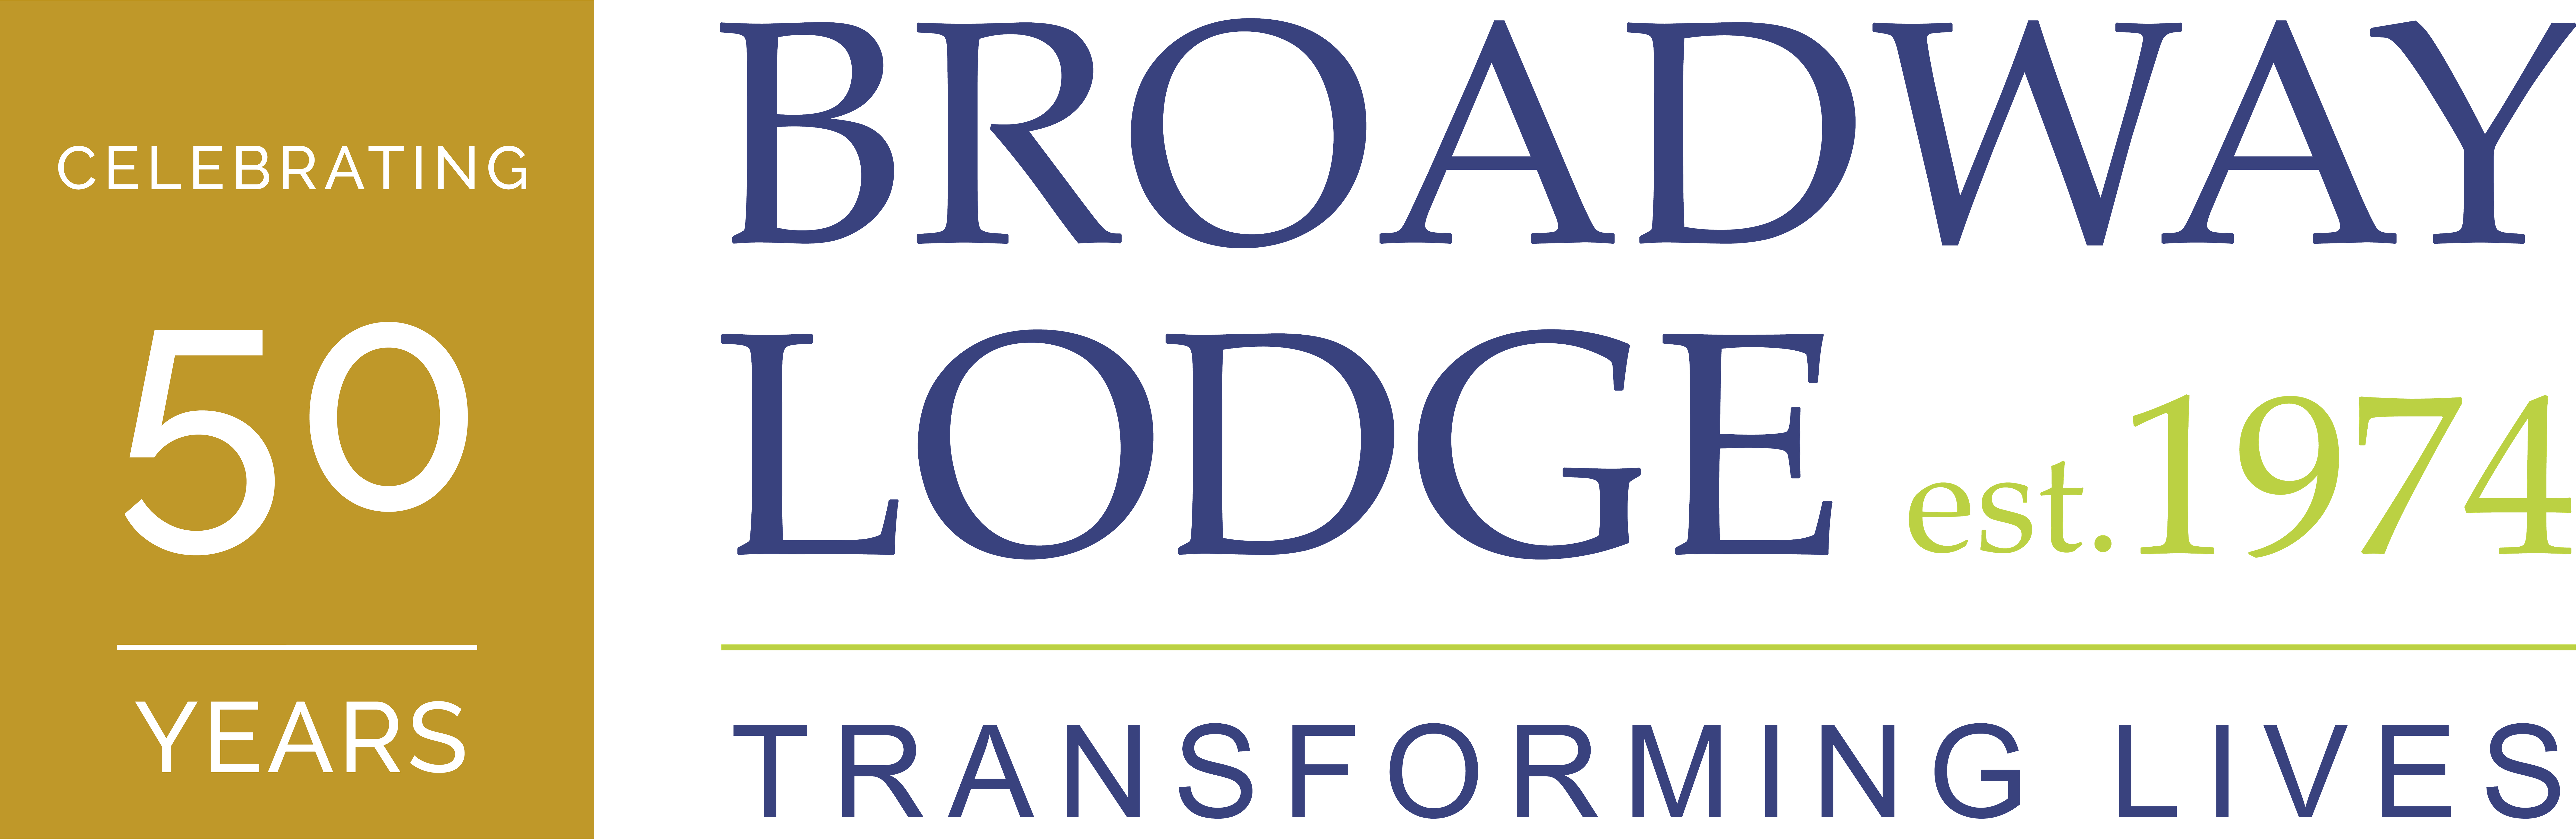 Broadway Lodge Logo